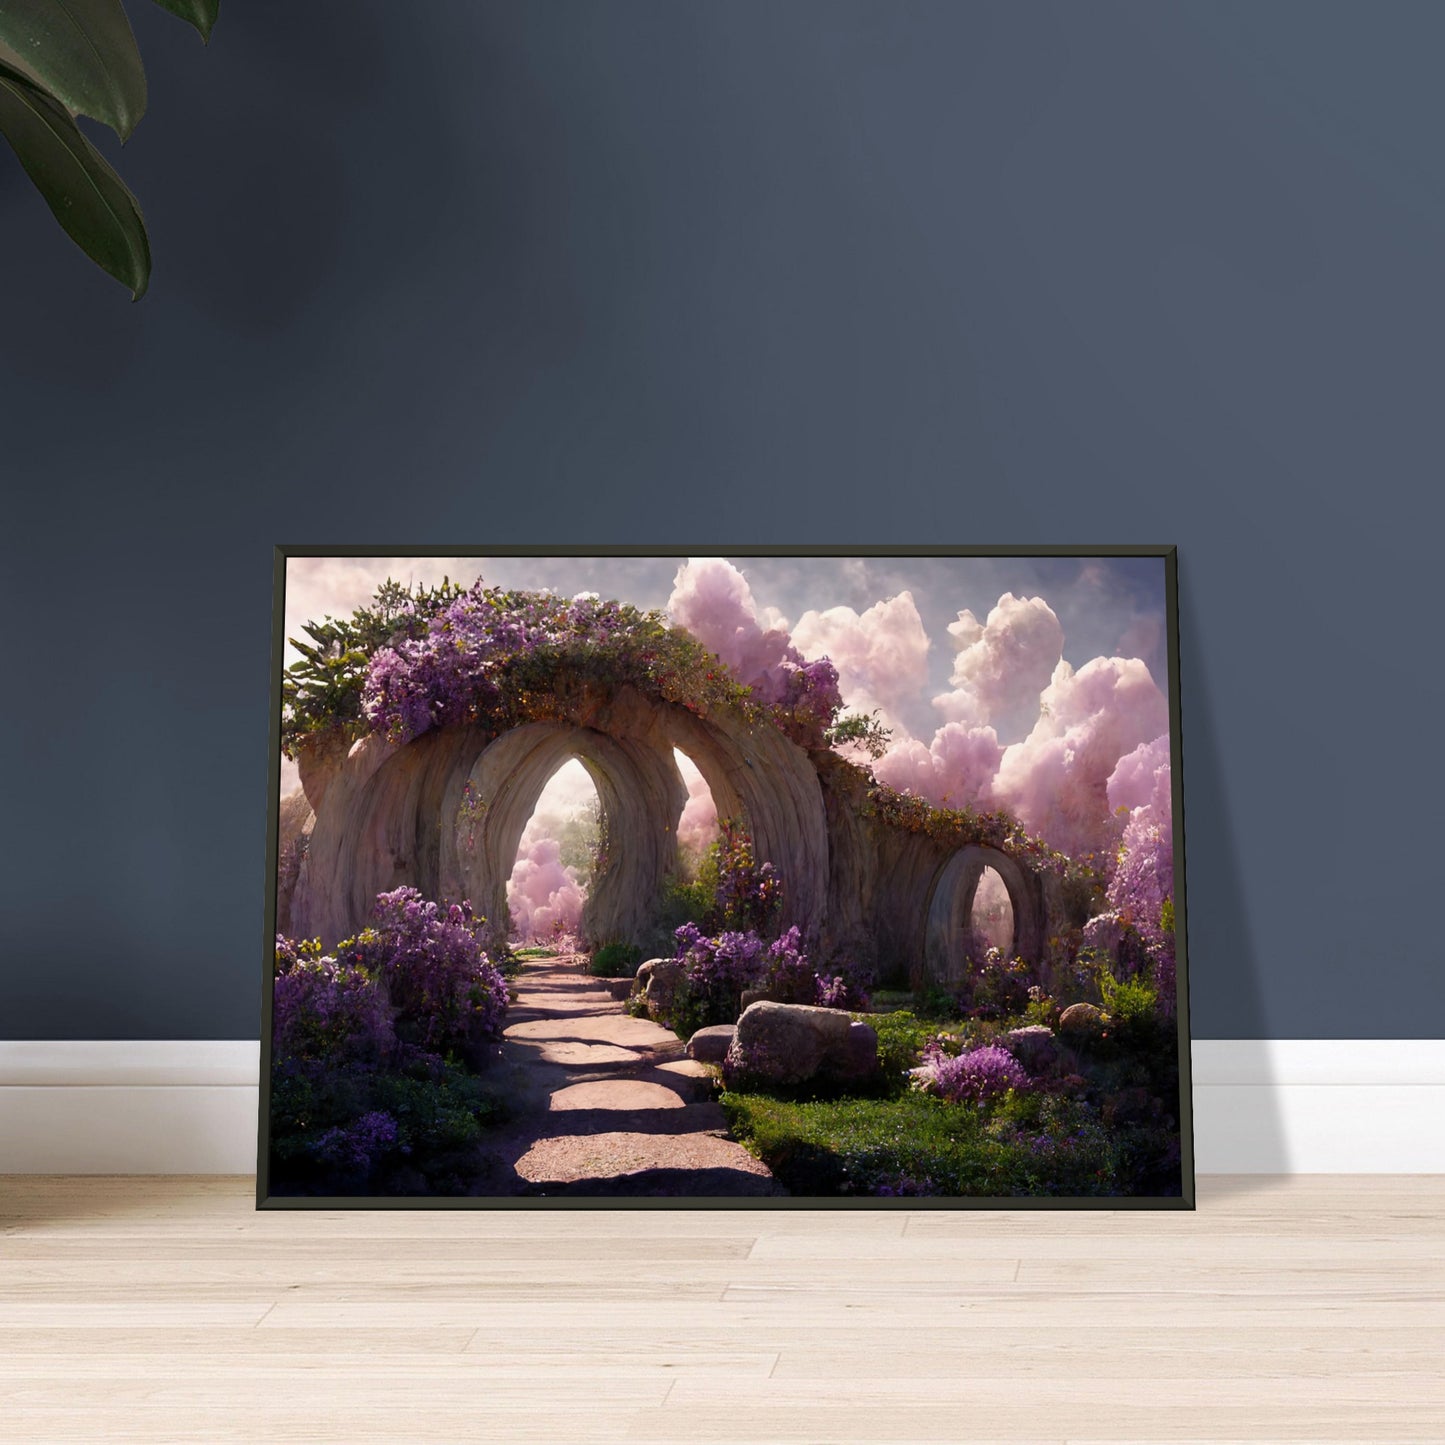 Fairy garden with a stone arch